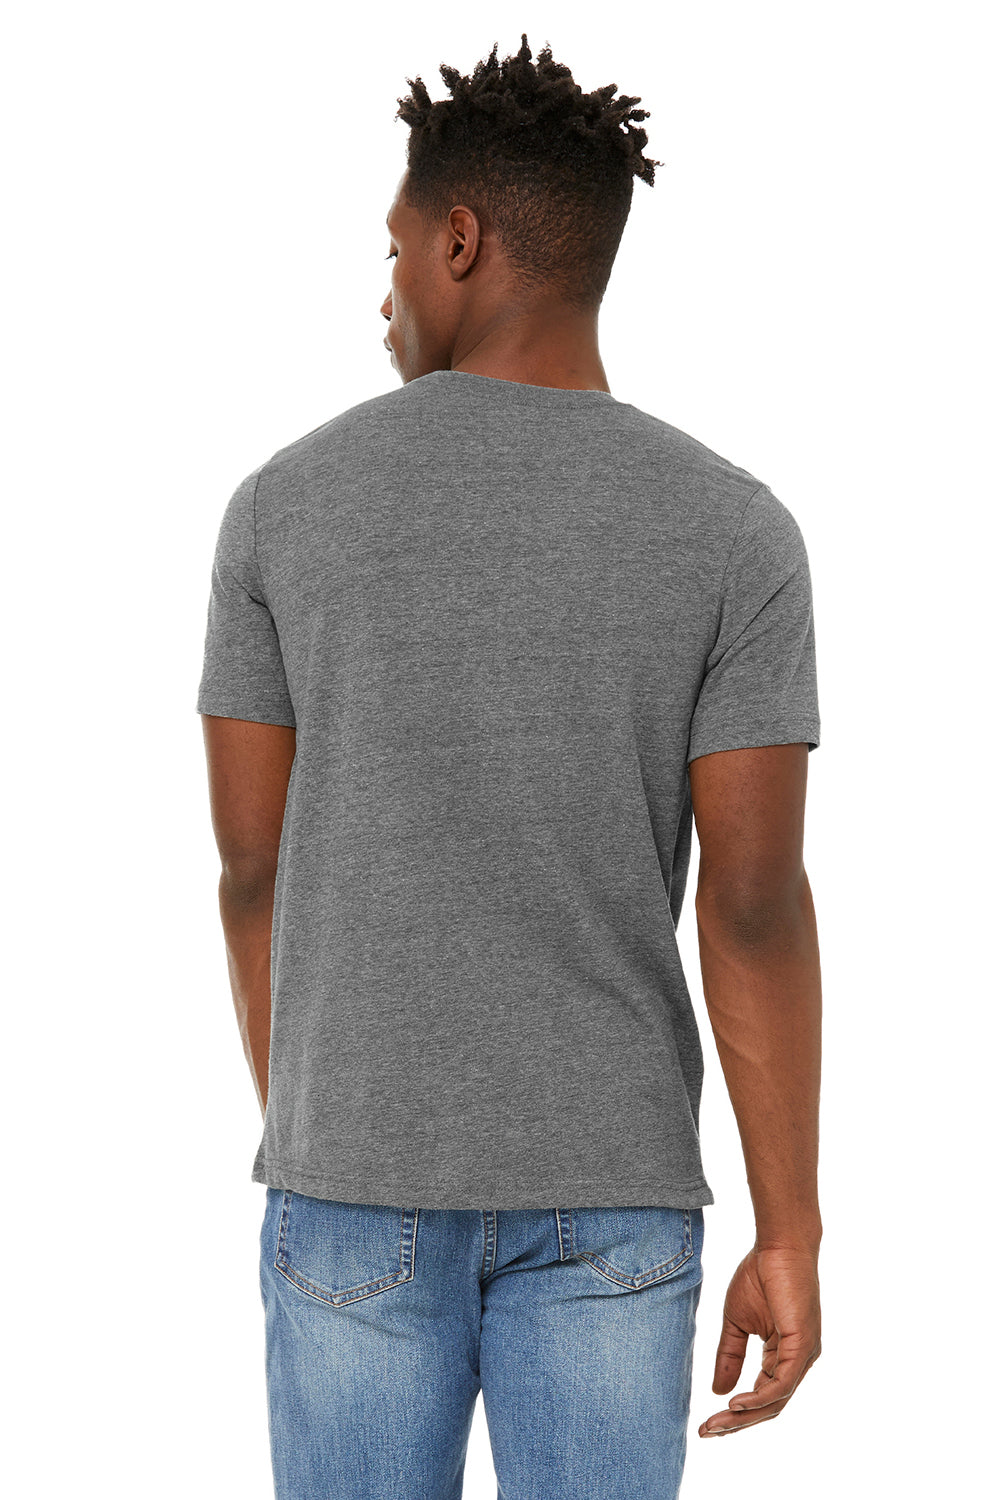 Bella + Canvas BC3301/3301C/3301 Mens Jersey Short Sleeve Crewneck T-Shirt Heather Deep Grey Model Back